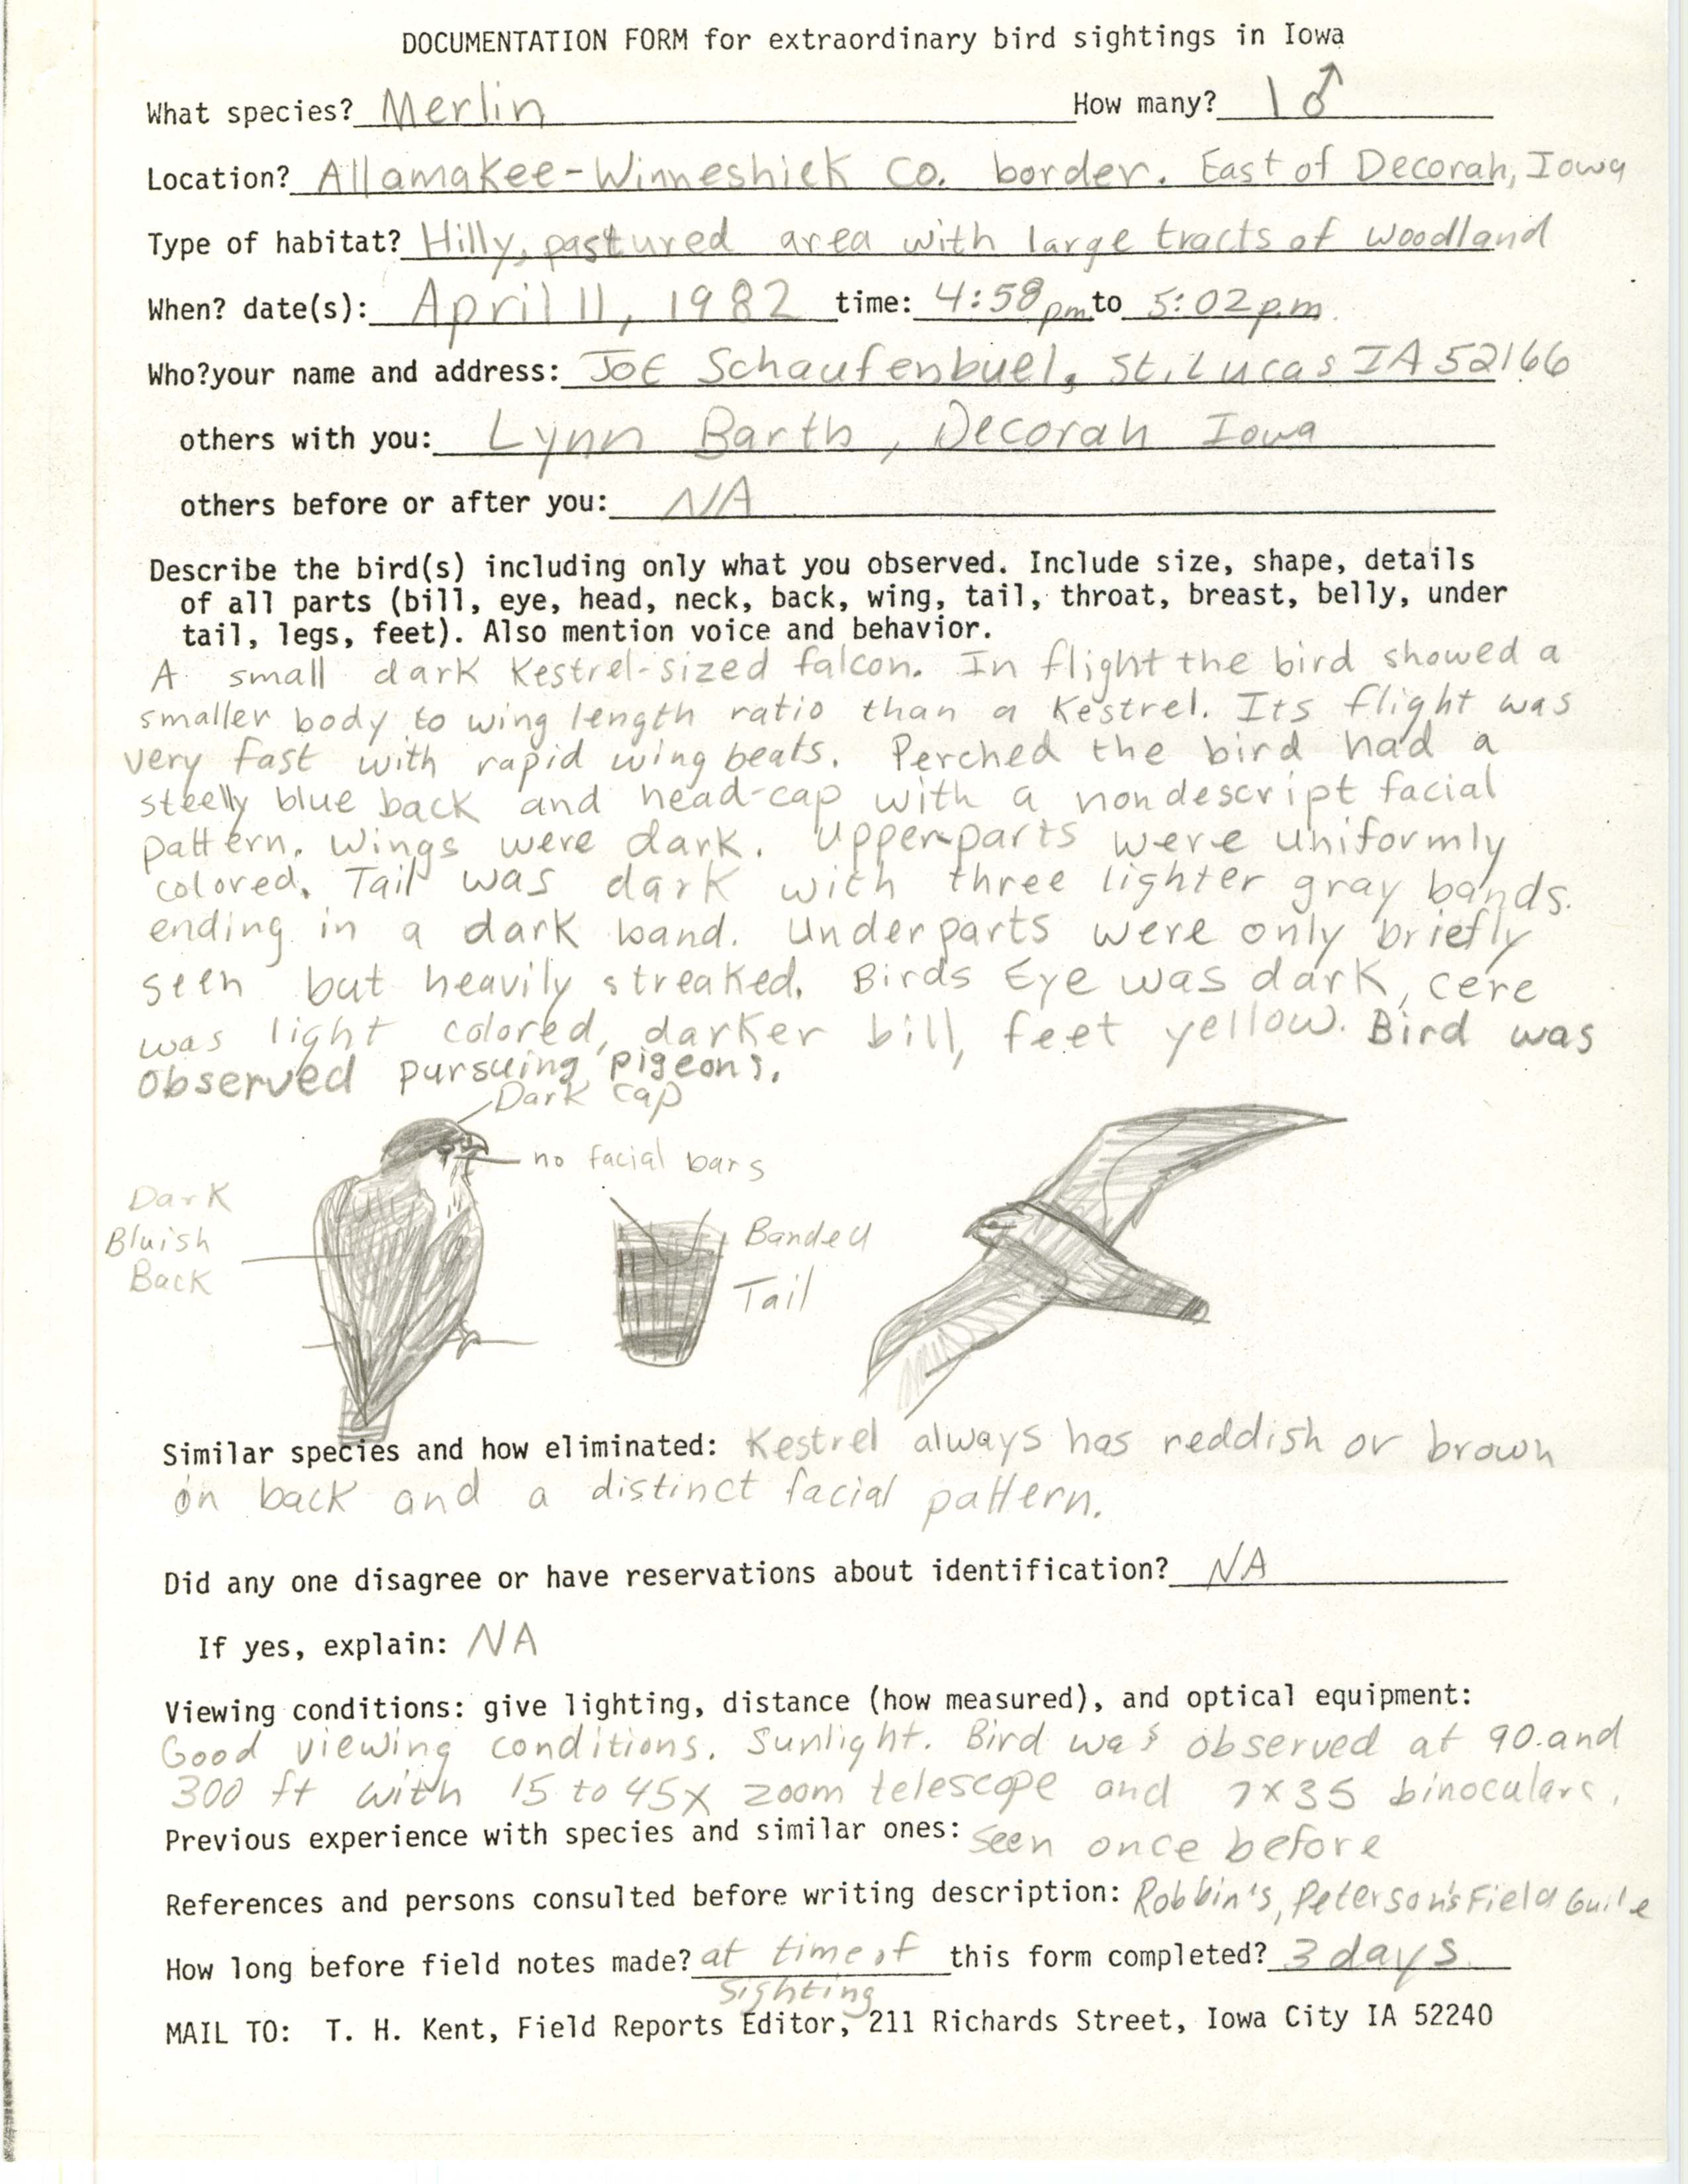 Rare bird documentation form for Merlin east of Decorah, 1982